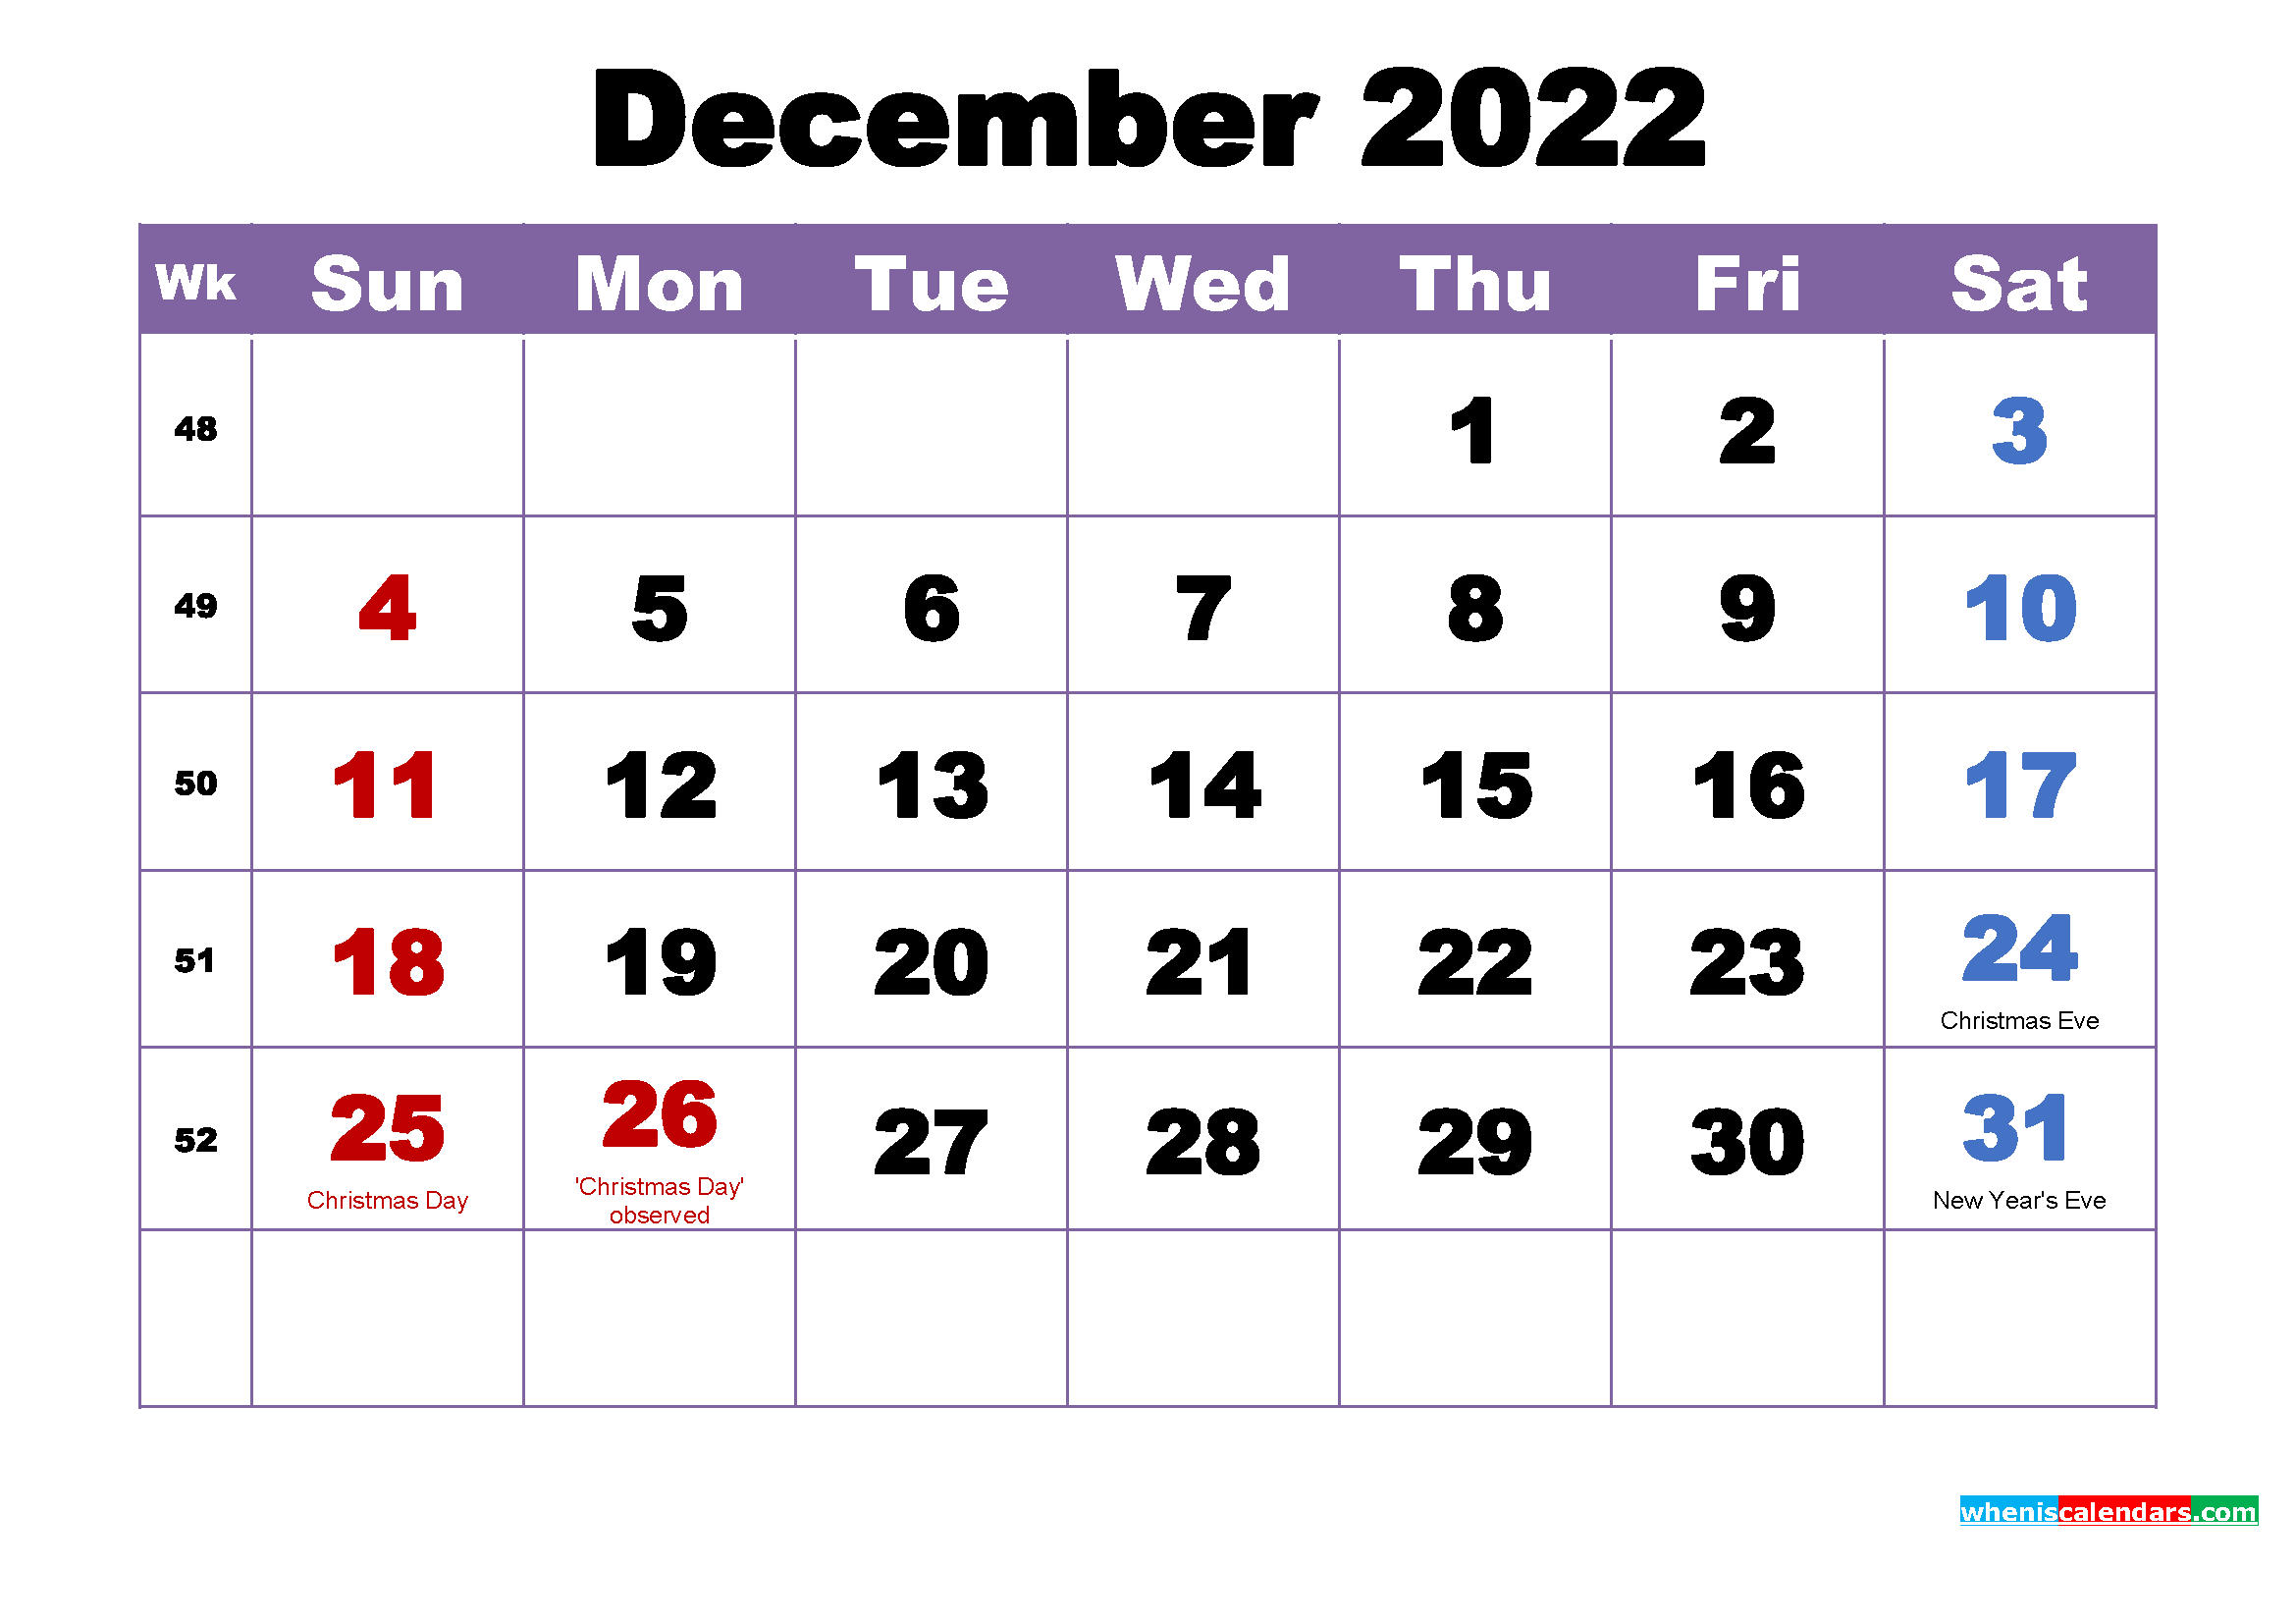 December 2022 Calendar Template Free December 2022 Calendar With Holidays Printable